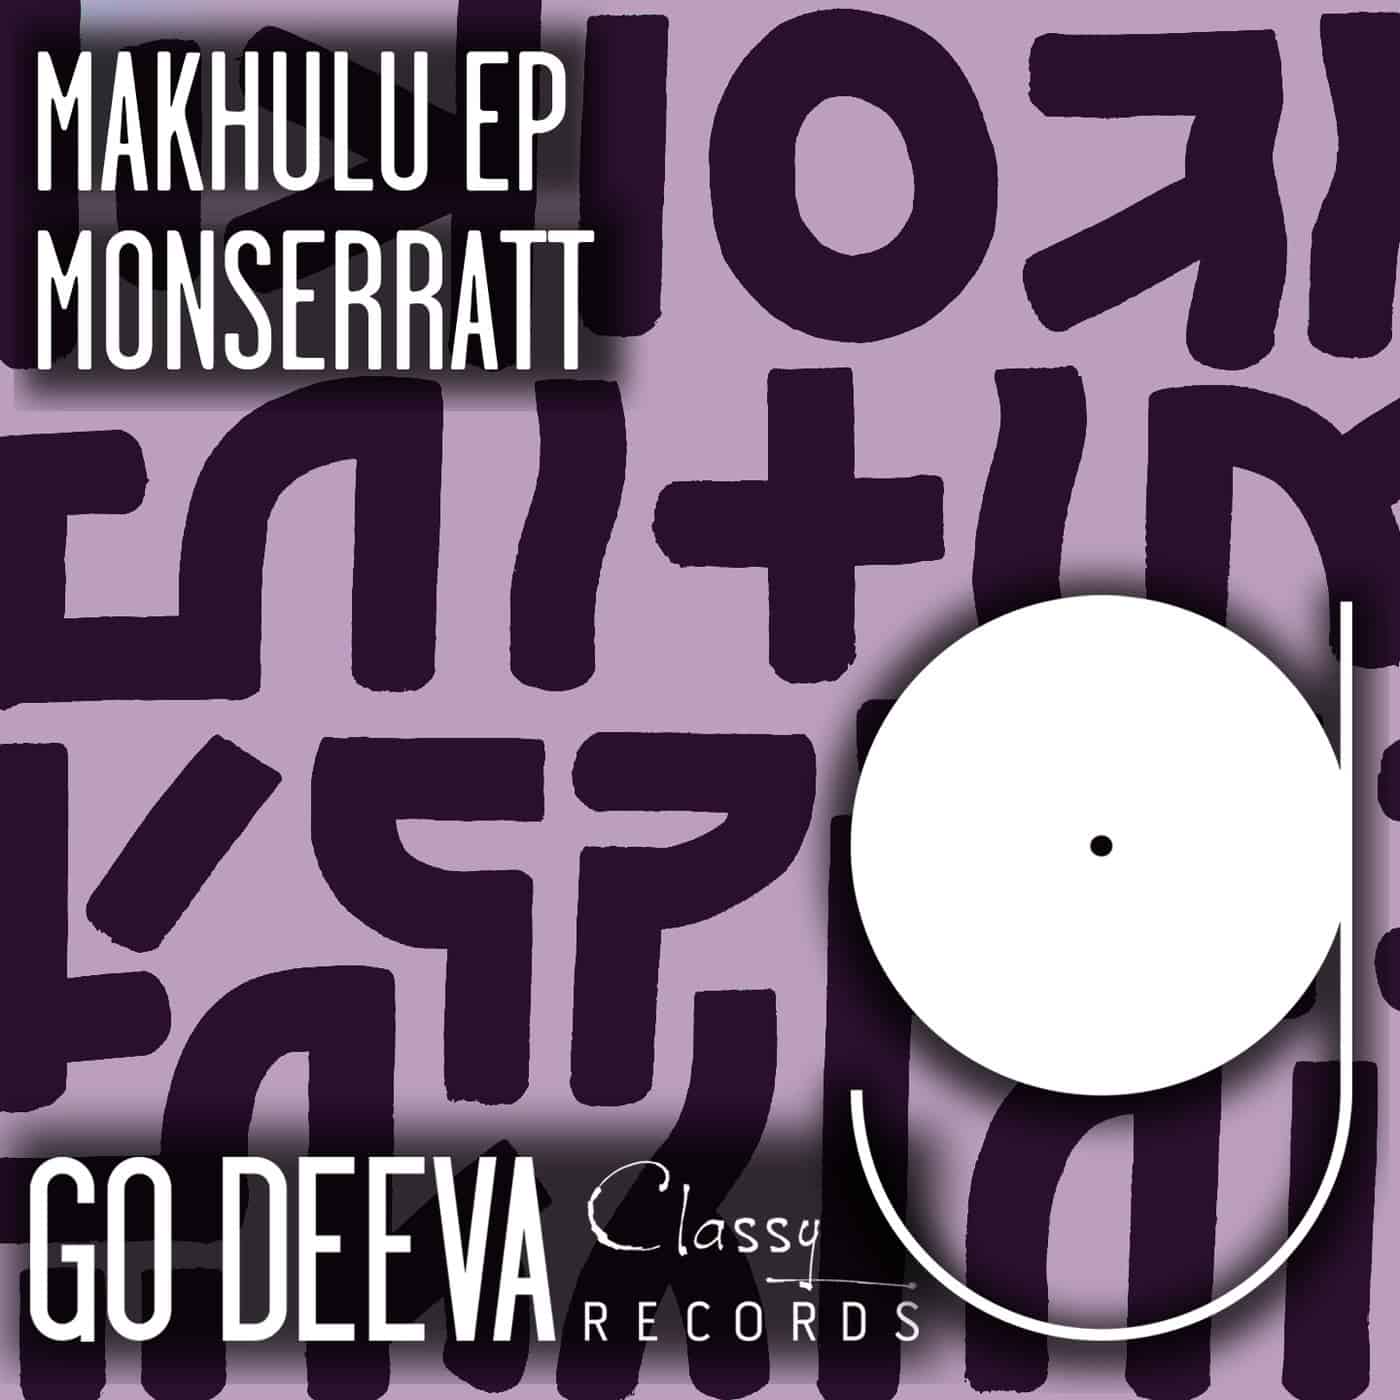 Download Monserratt - Makhulu Ep